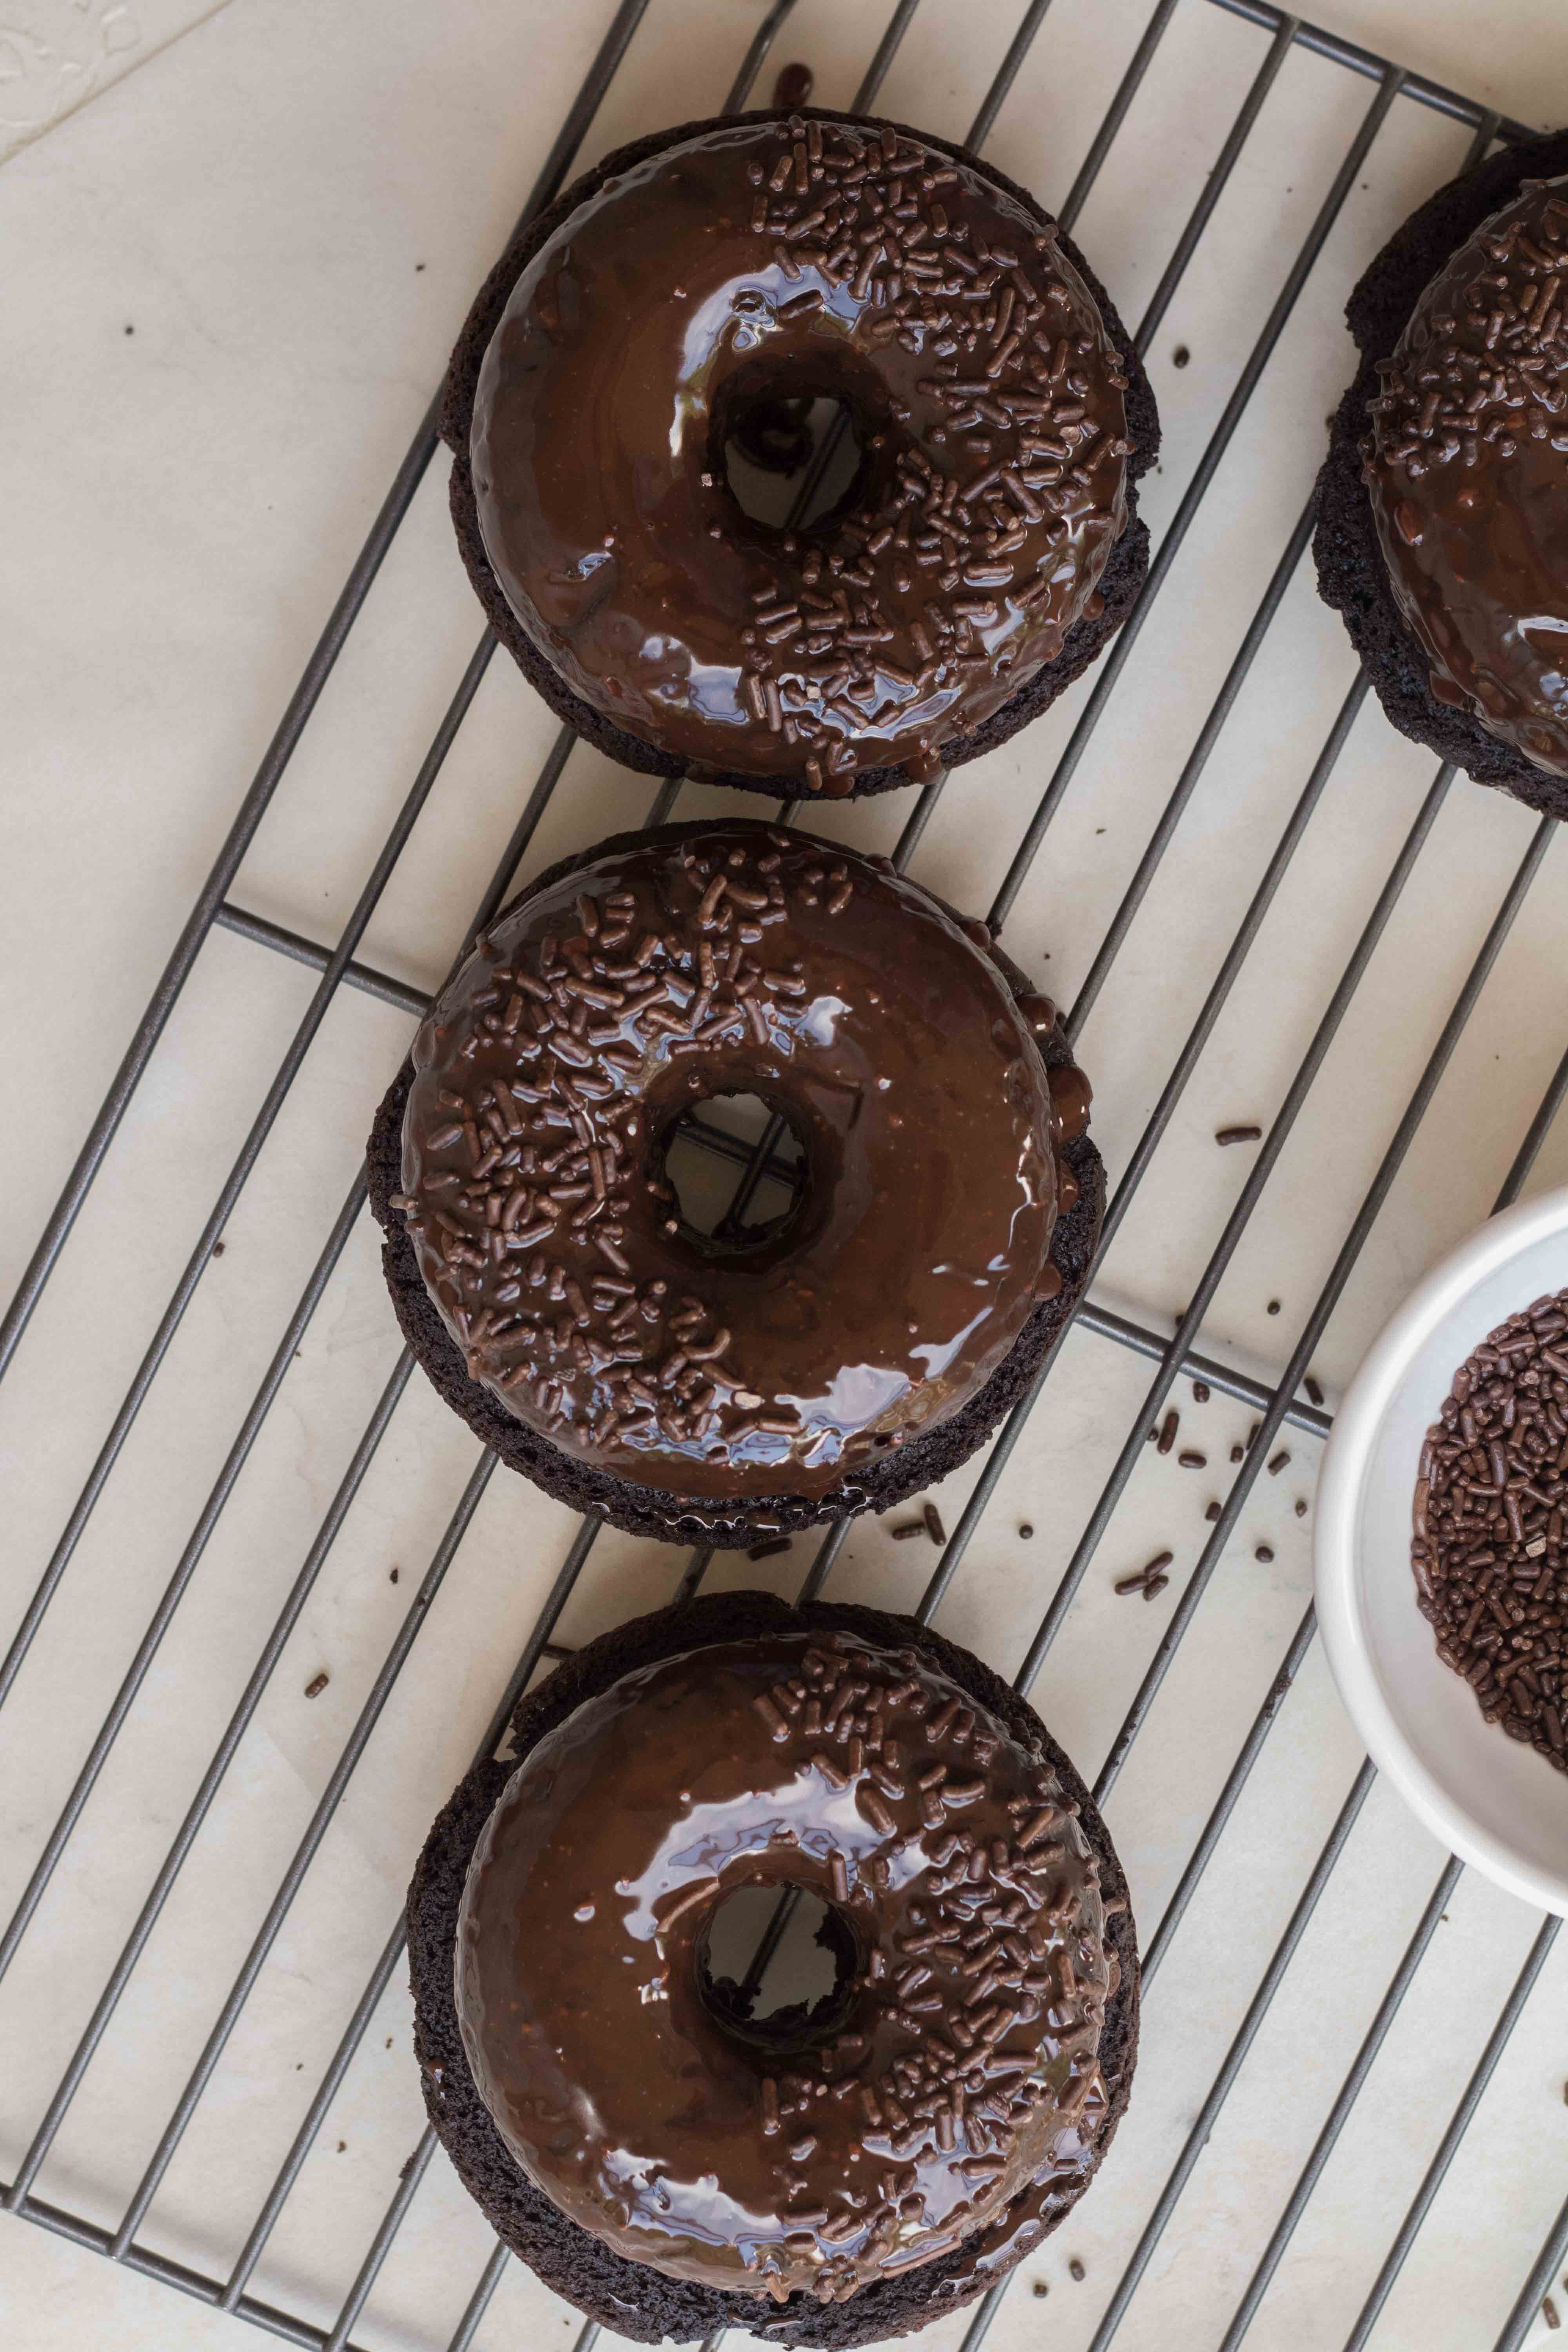 Glazed baked chocolate donuts